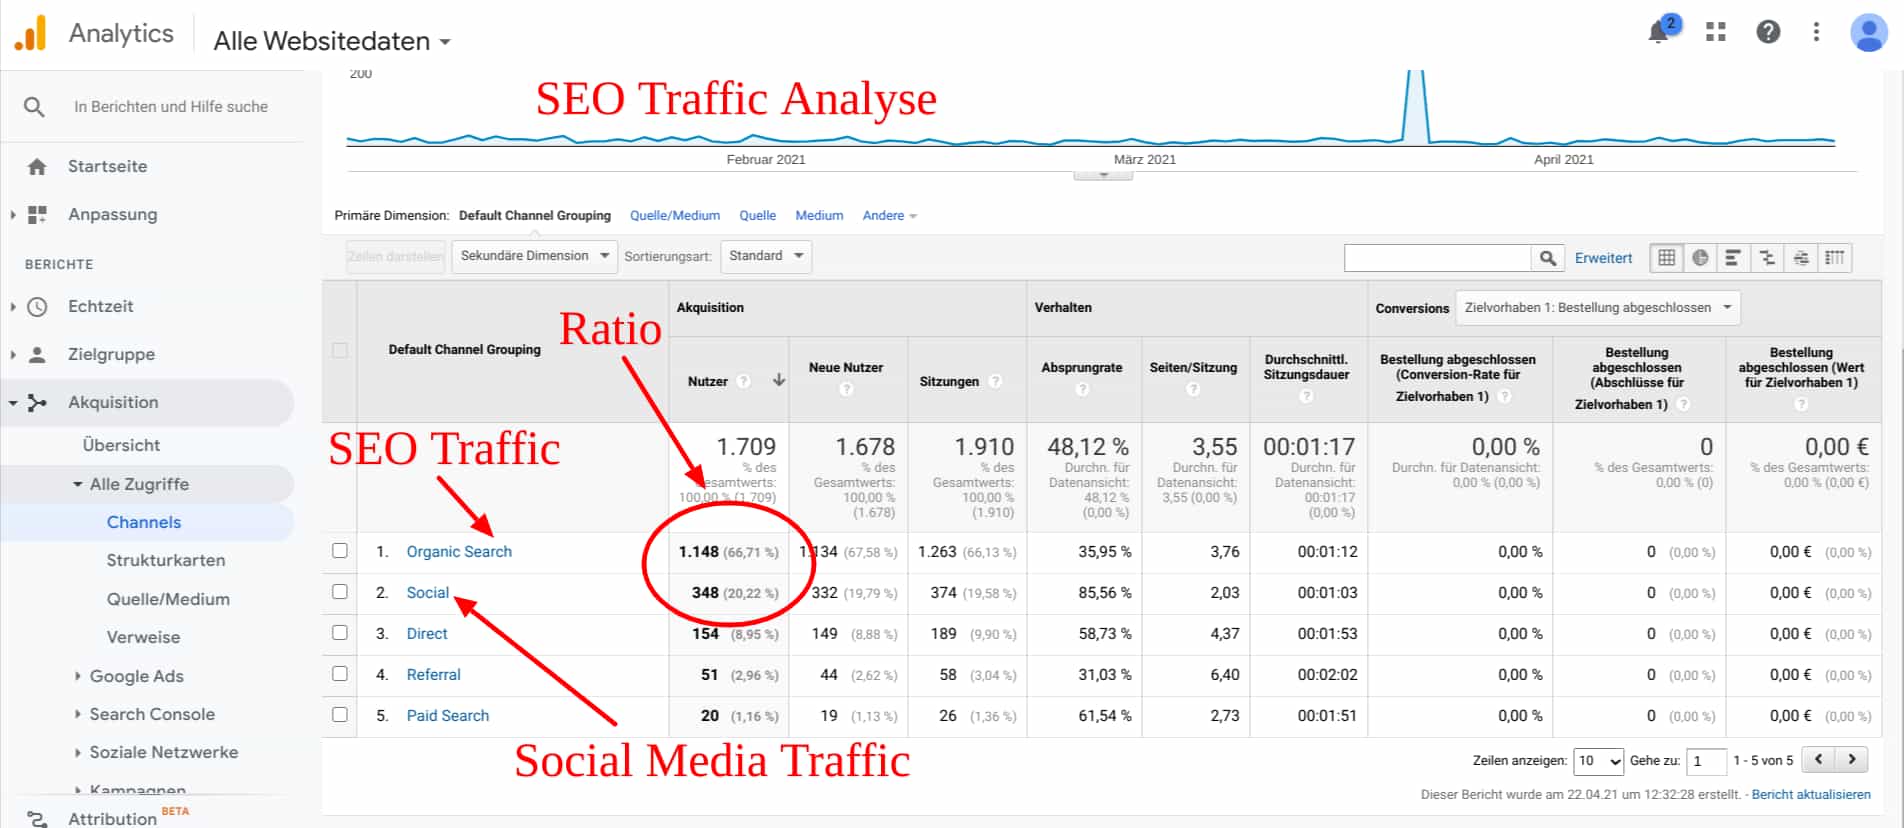 SEO Traffic Analyse in Google Analytics